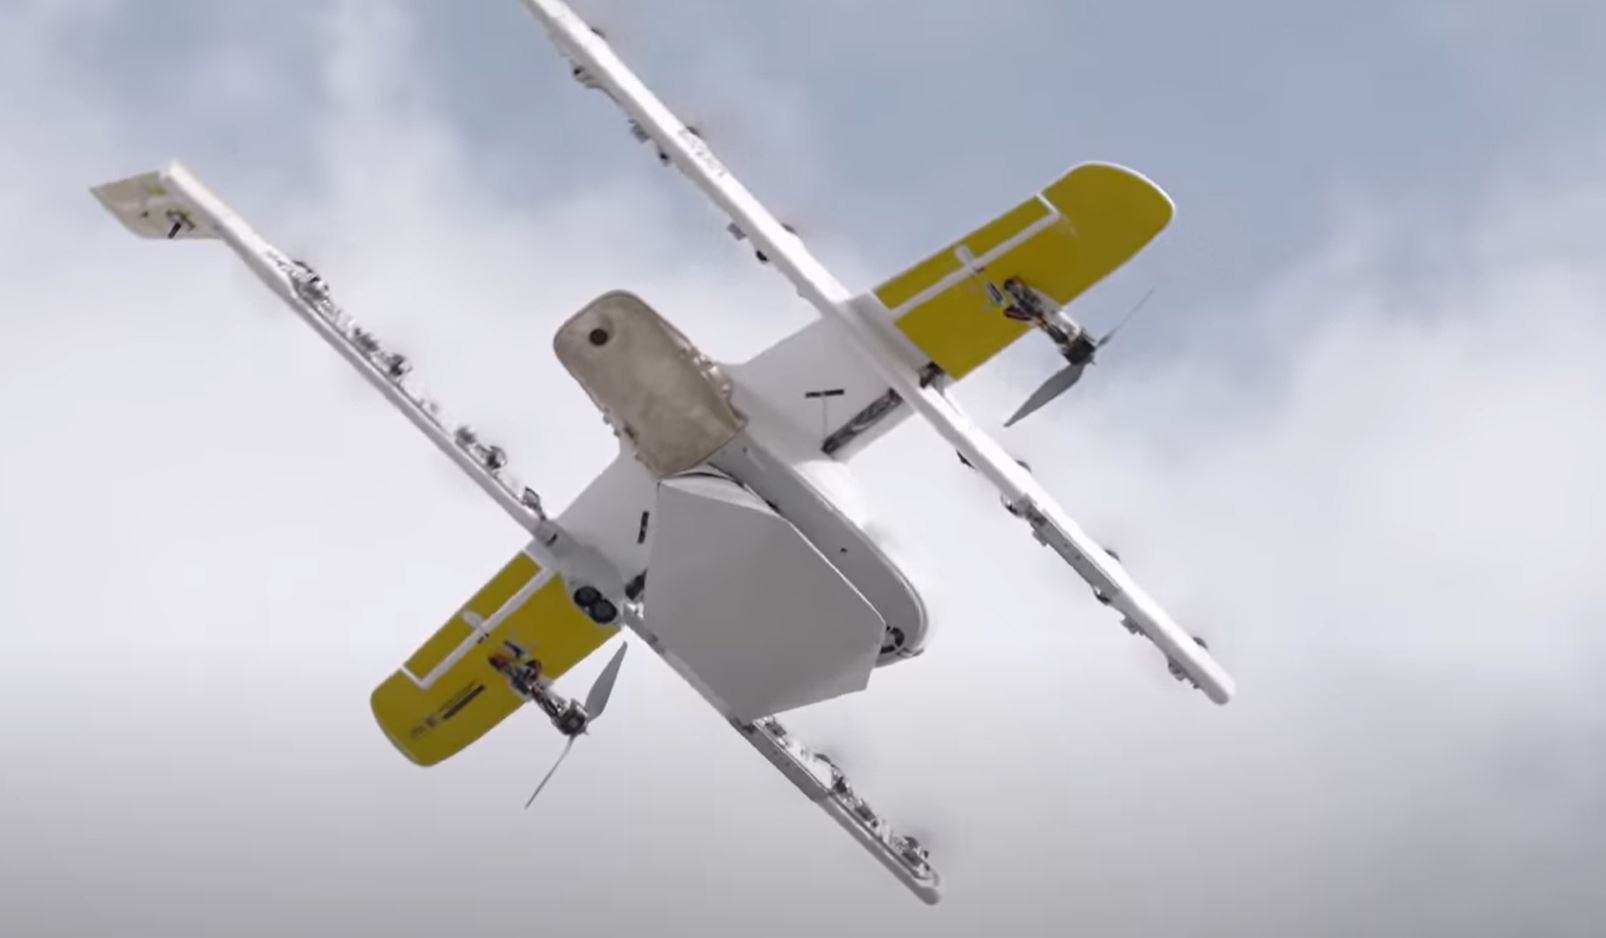 https://www.channelnews.com.au/wp-content/uploads/2020/05/Wing-drone.jpg